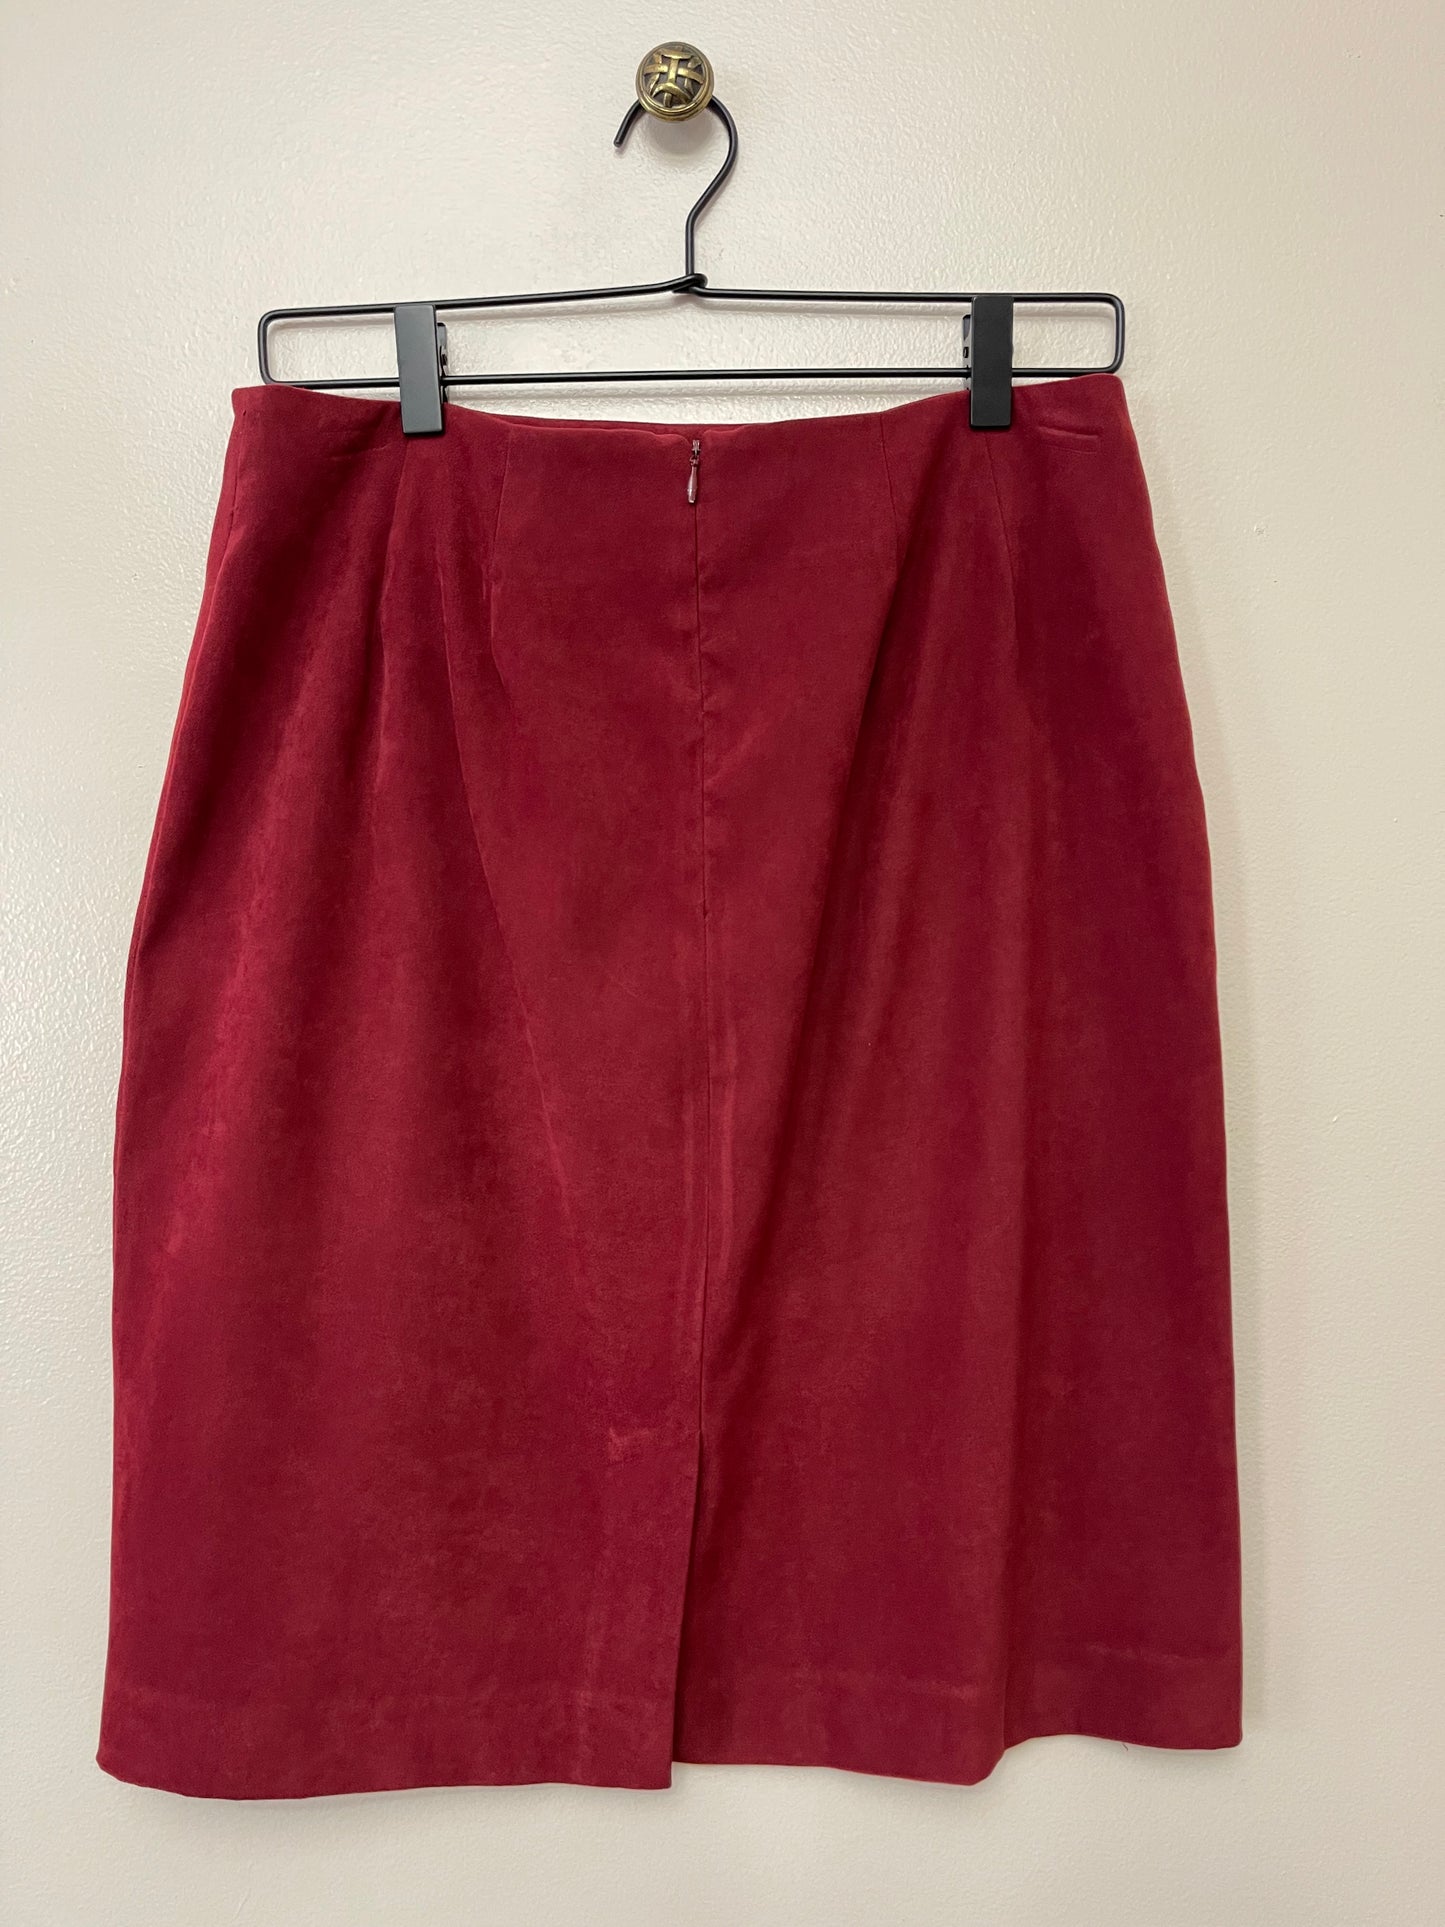 Cranberry Color Skirt